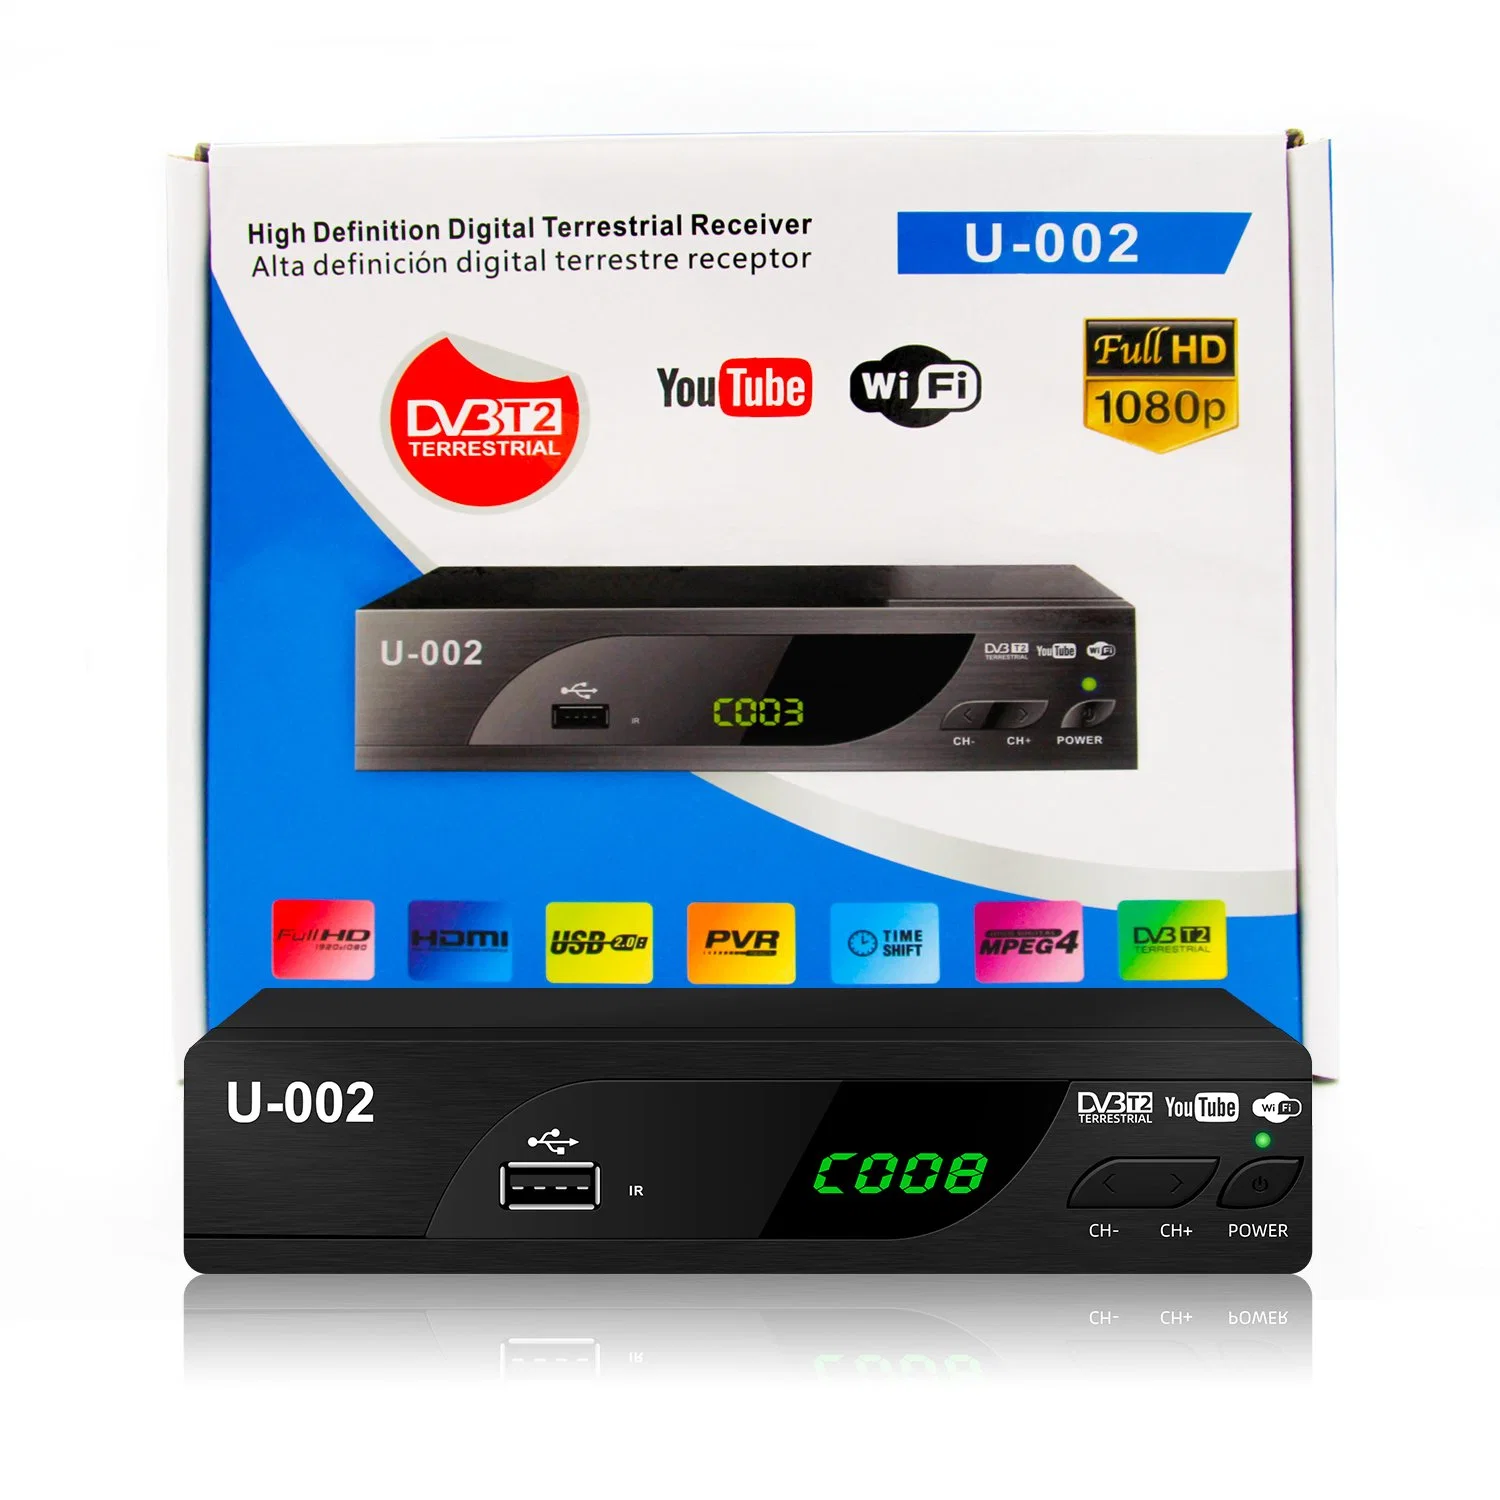 Sunplus 1509n WiFi Youtube HEVC H. 265 DVB T2 TV Receiver